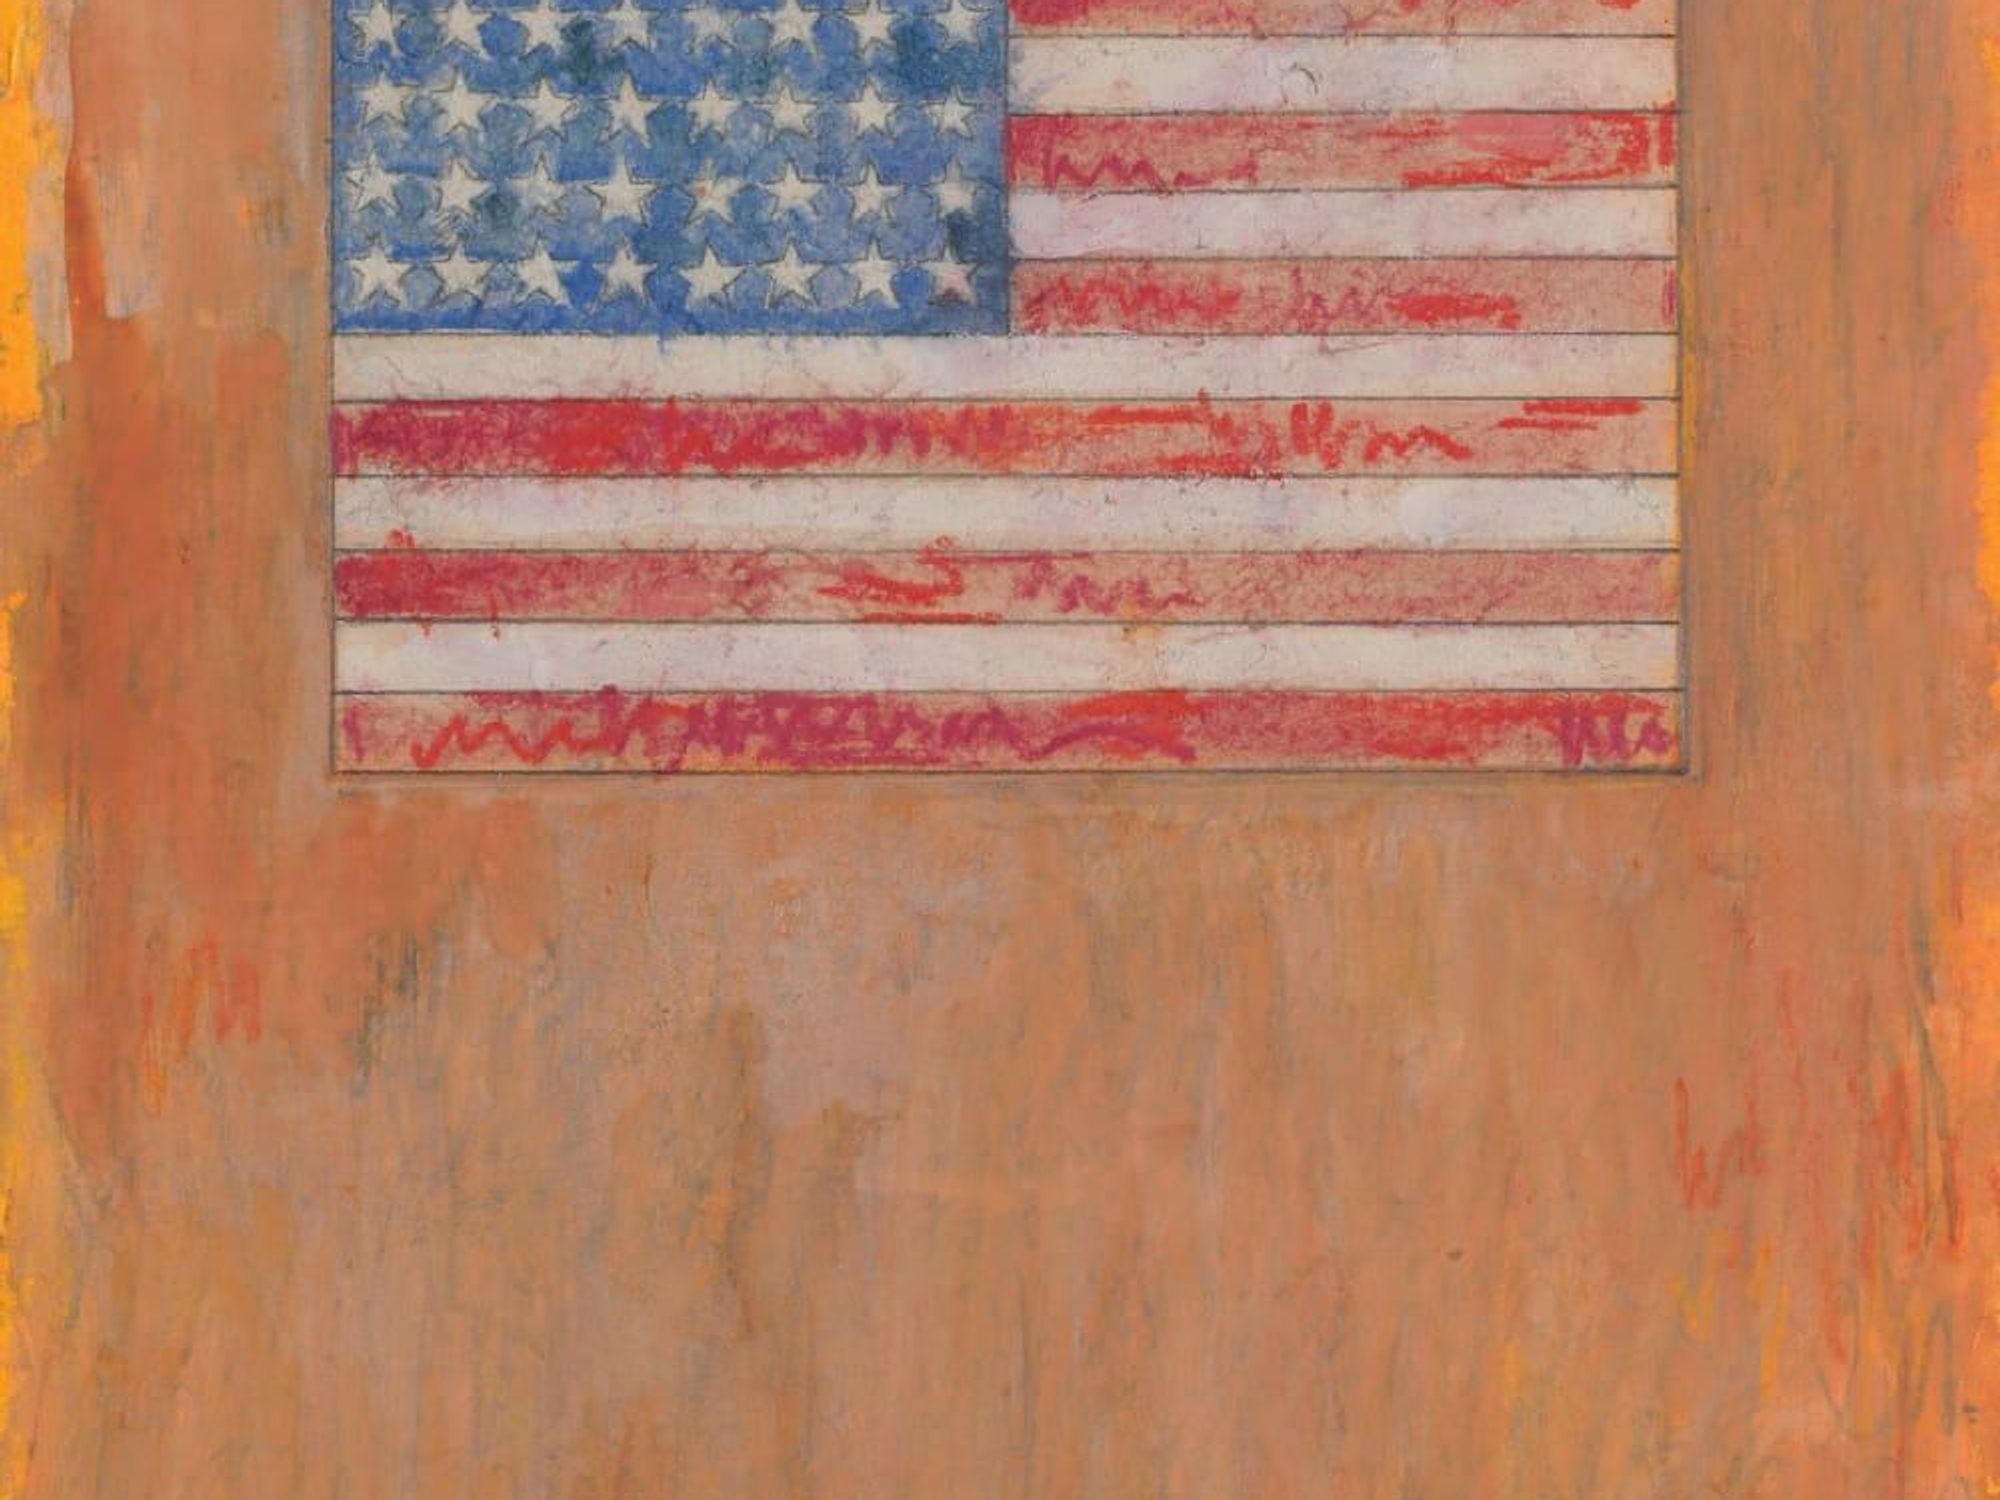 Jasper Johns, Flag on an Orange Field drawing